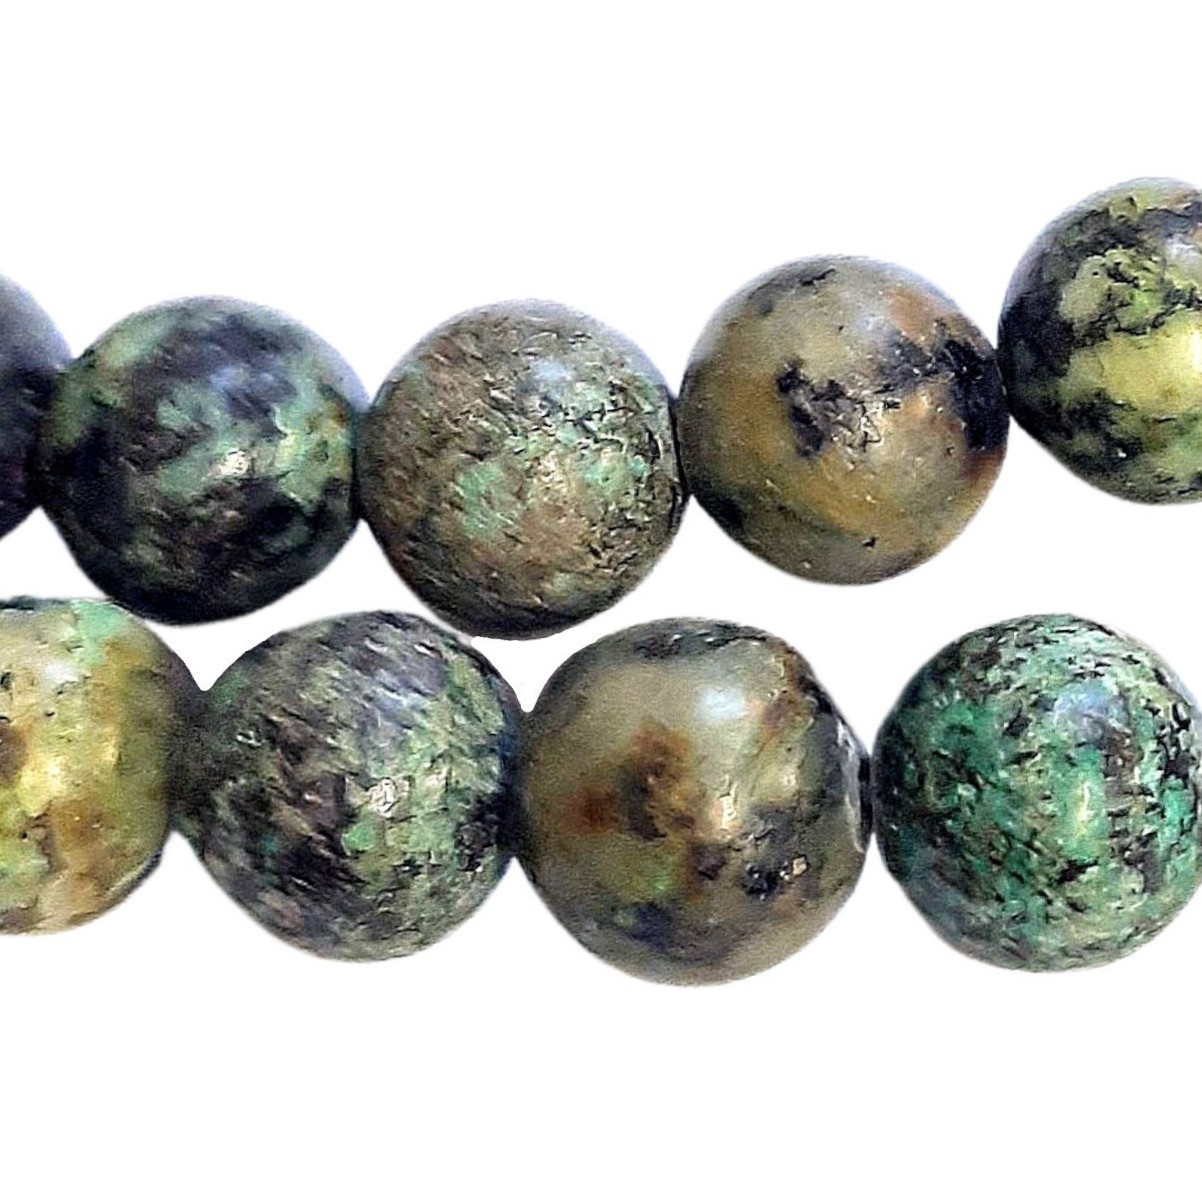 25 perles en  turquoise naturel africain 8 mm